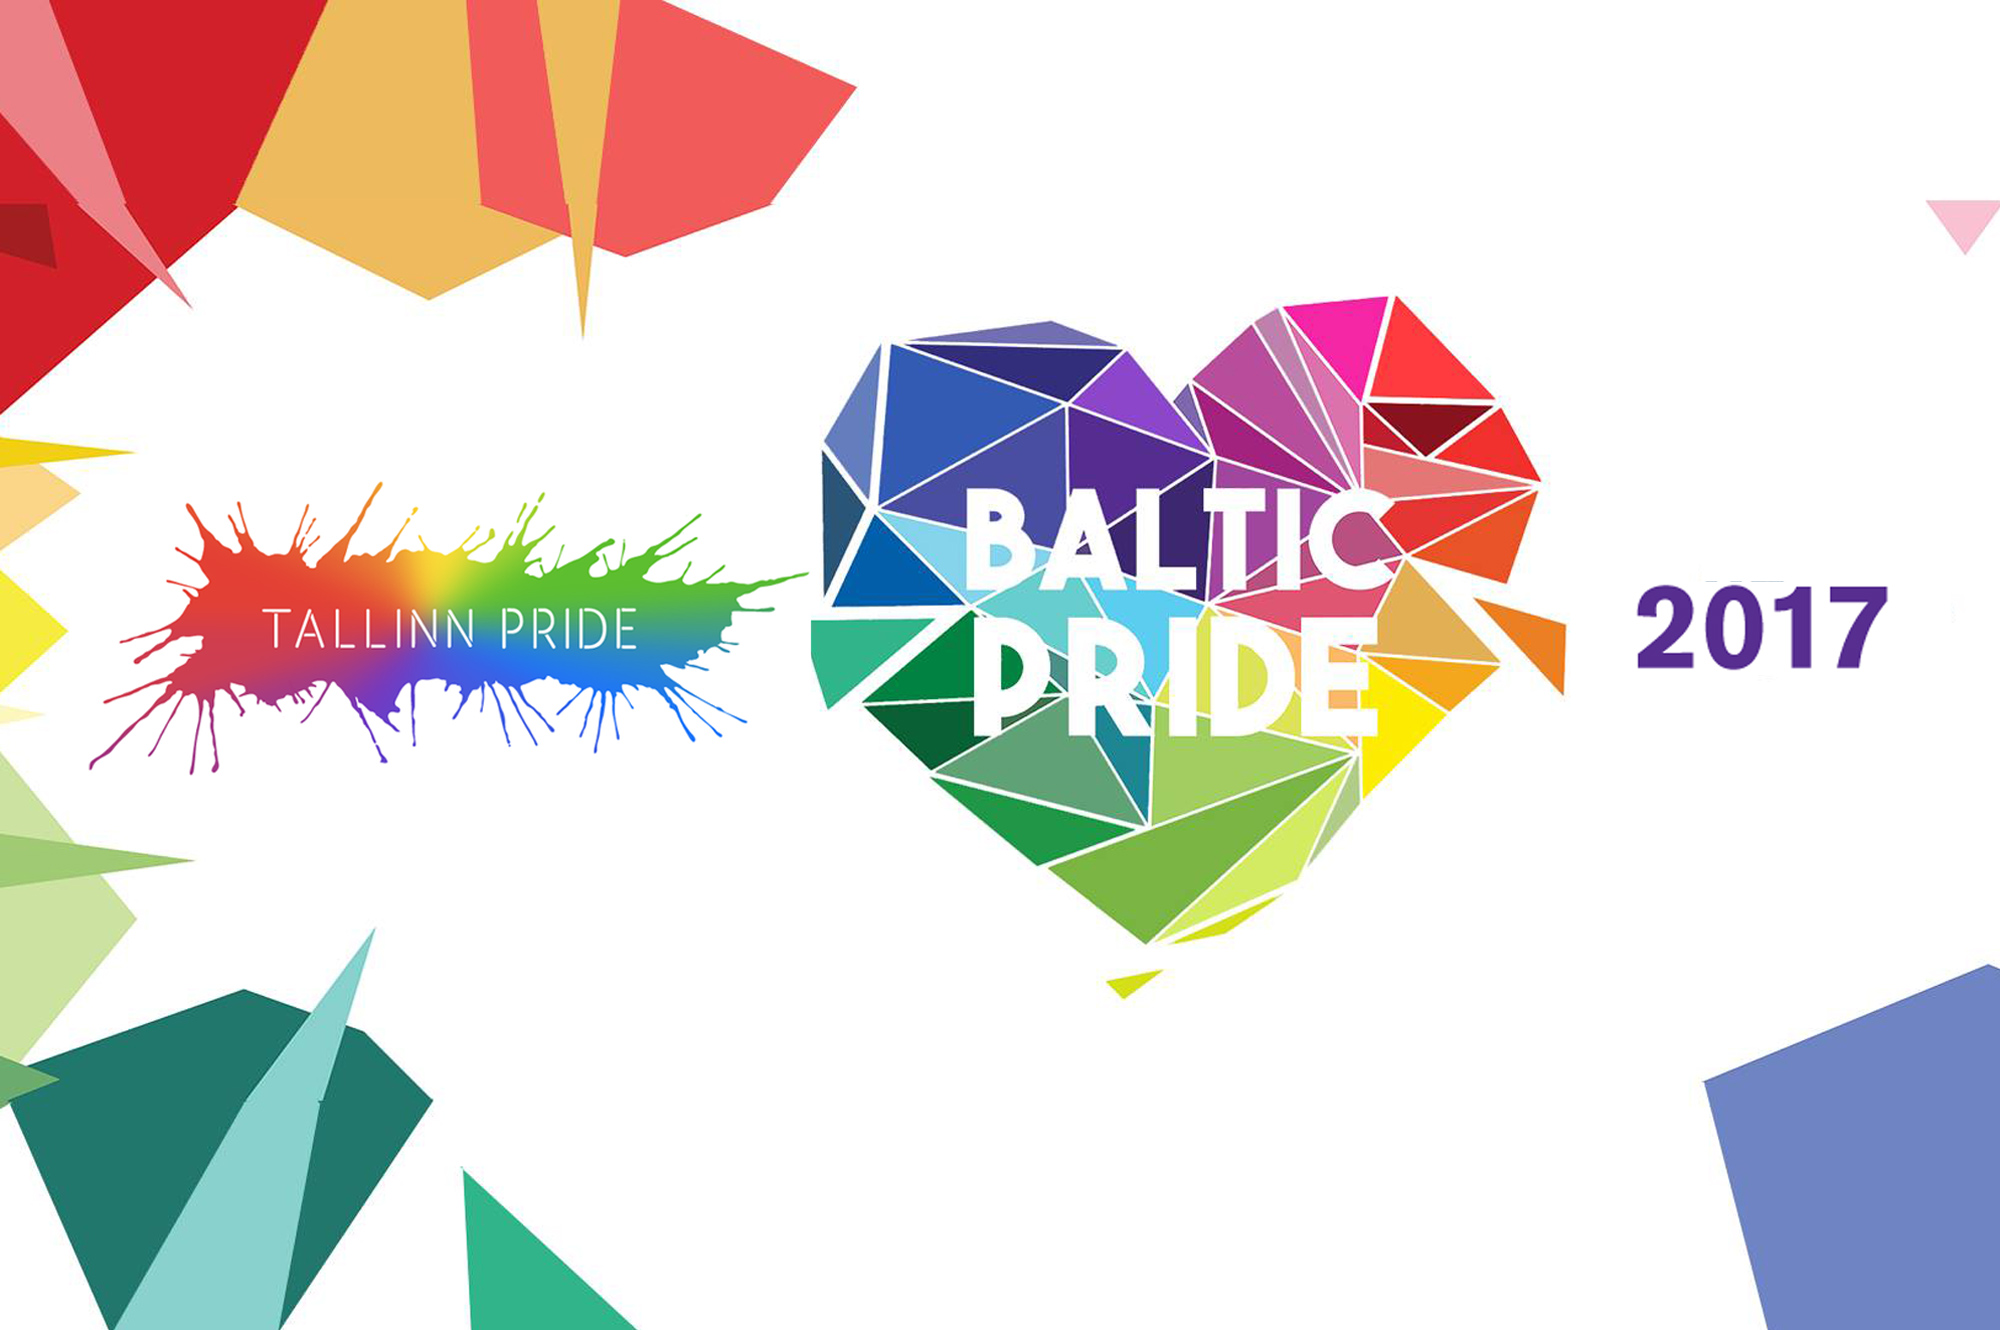 “United” – We are going to Baltic Pride 2017 in Tallinn | Estonia